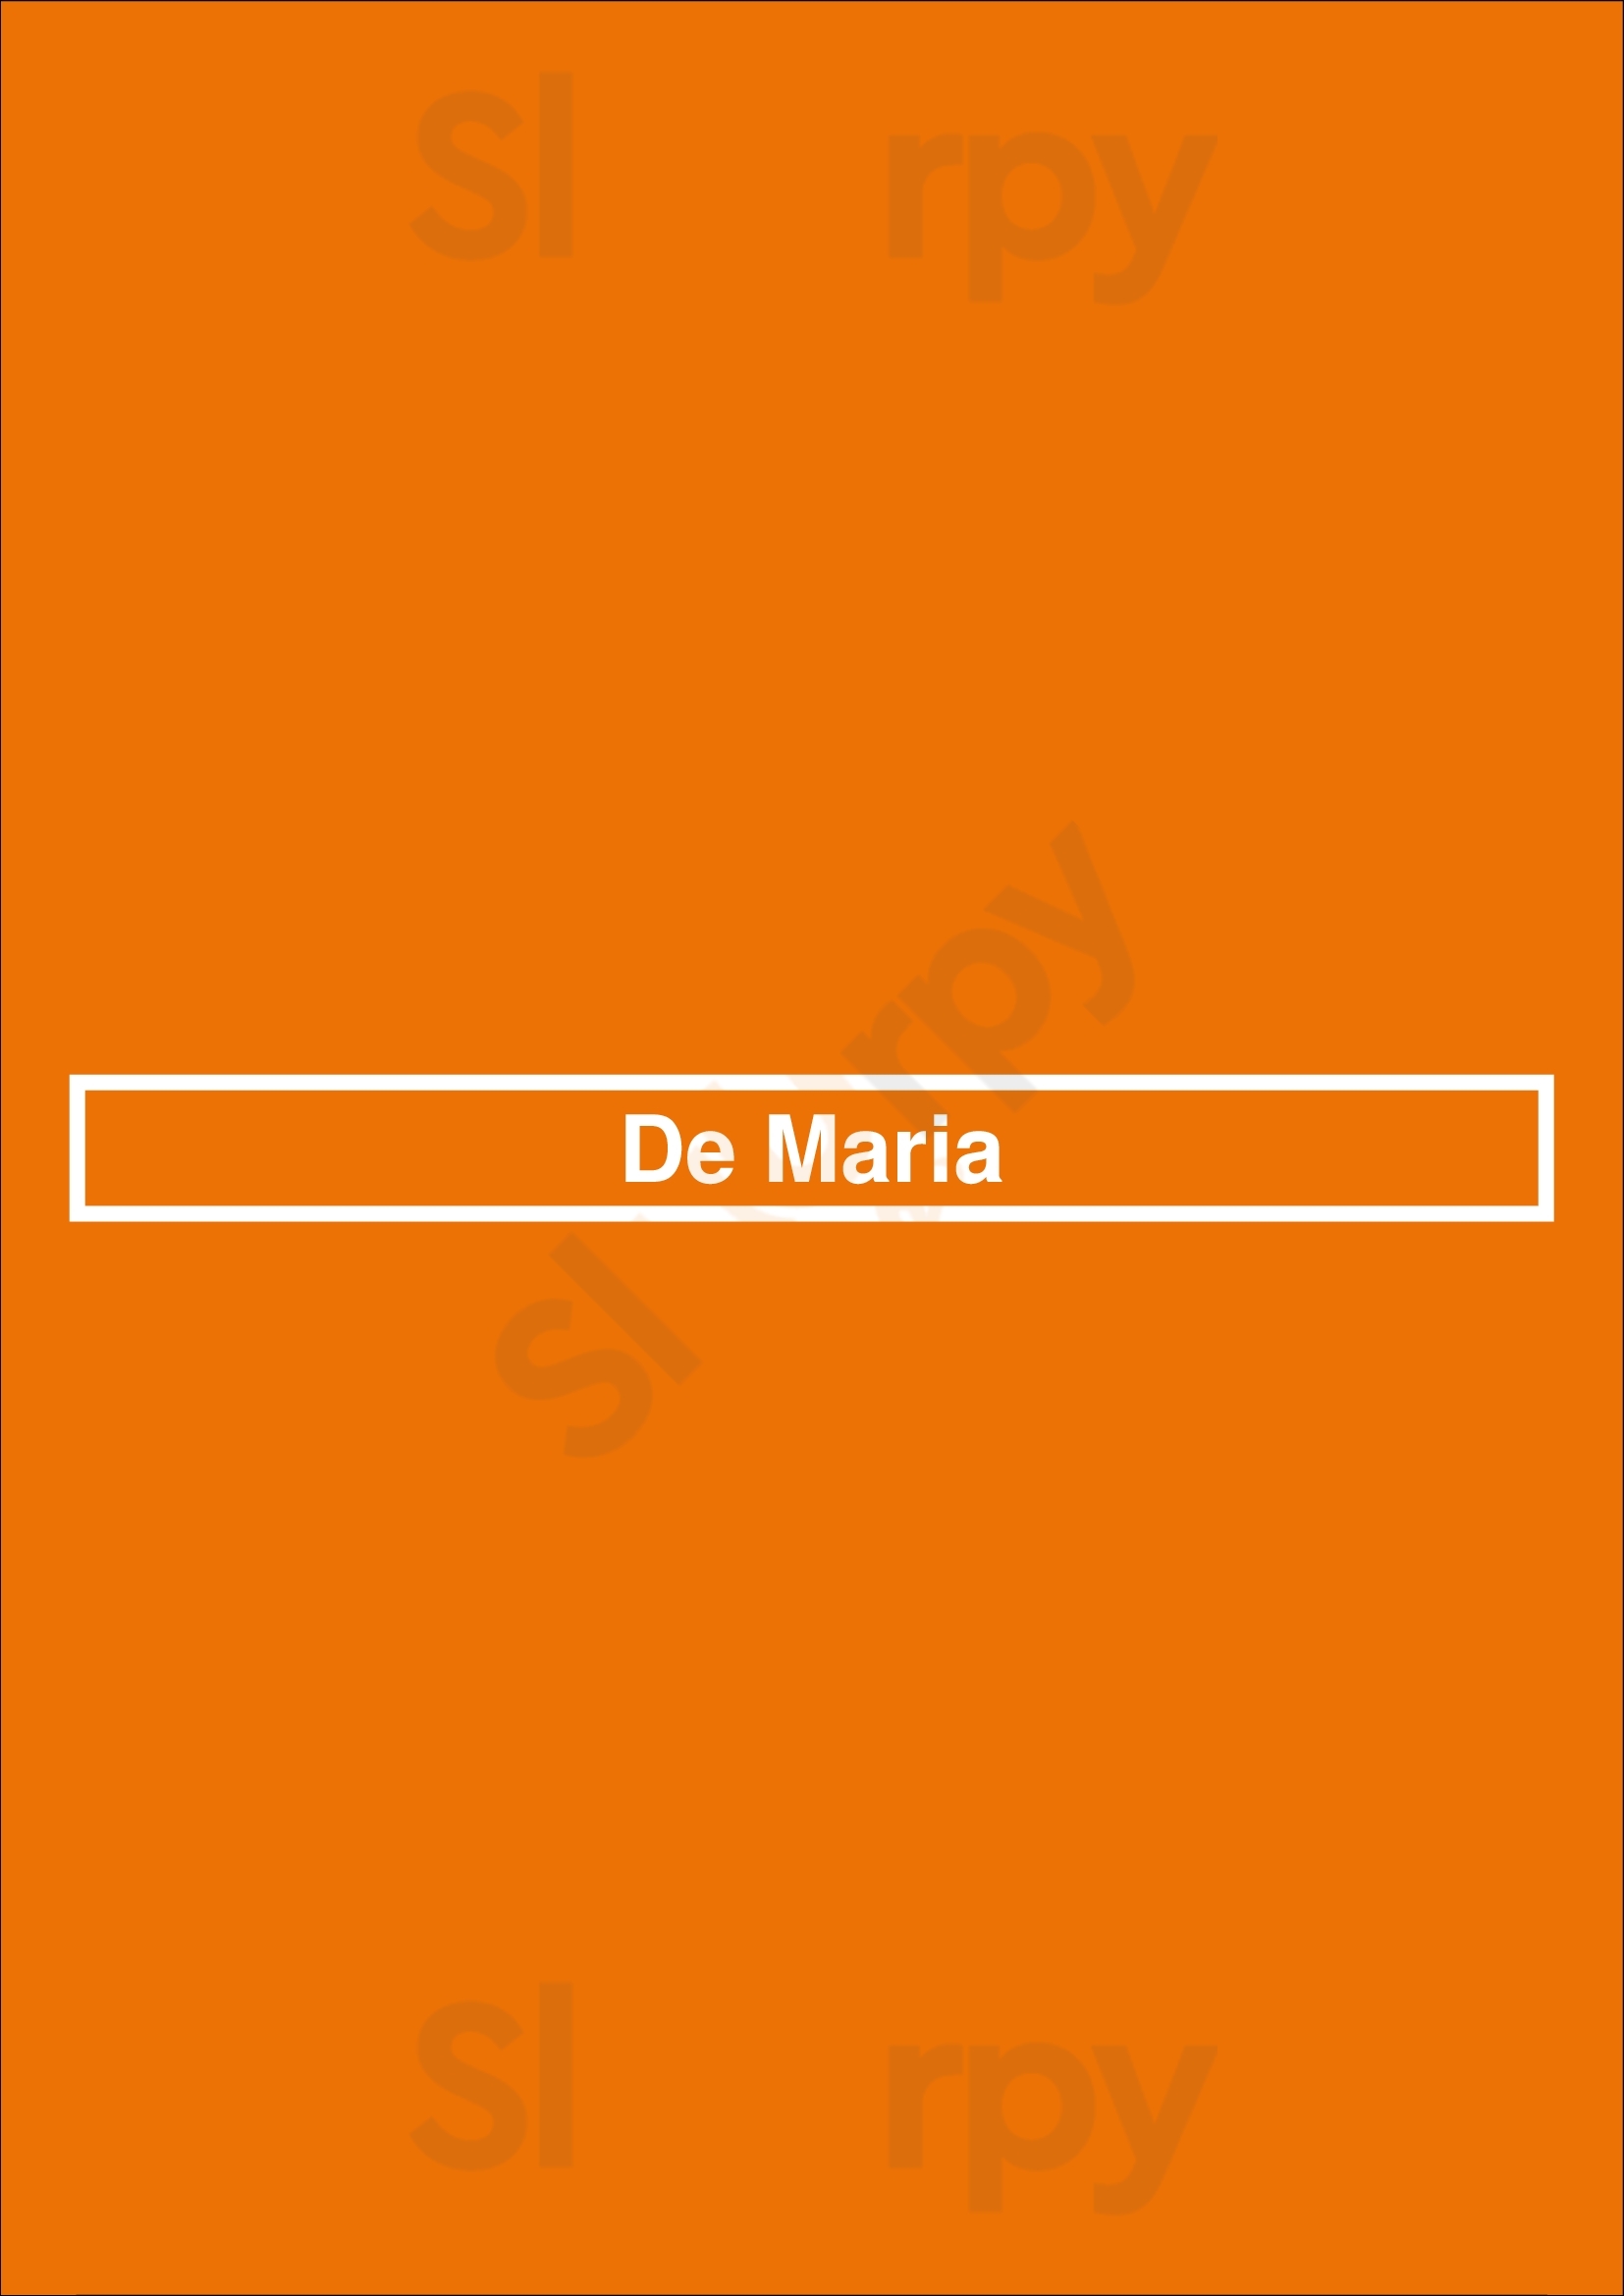 De Maria Amsterdam Menu - 1